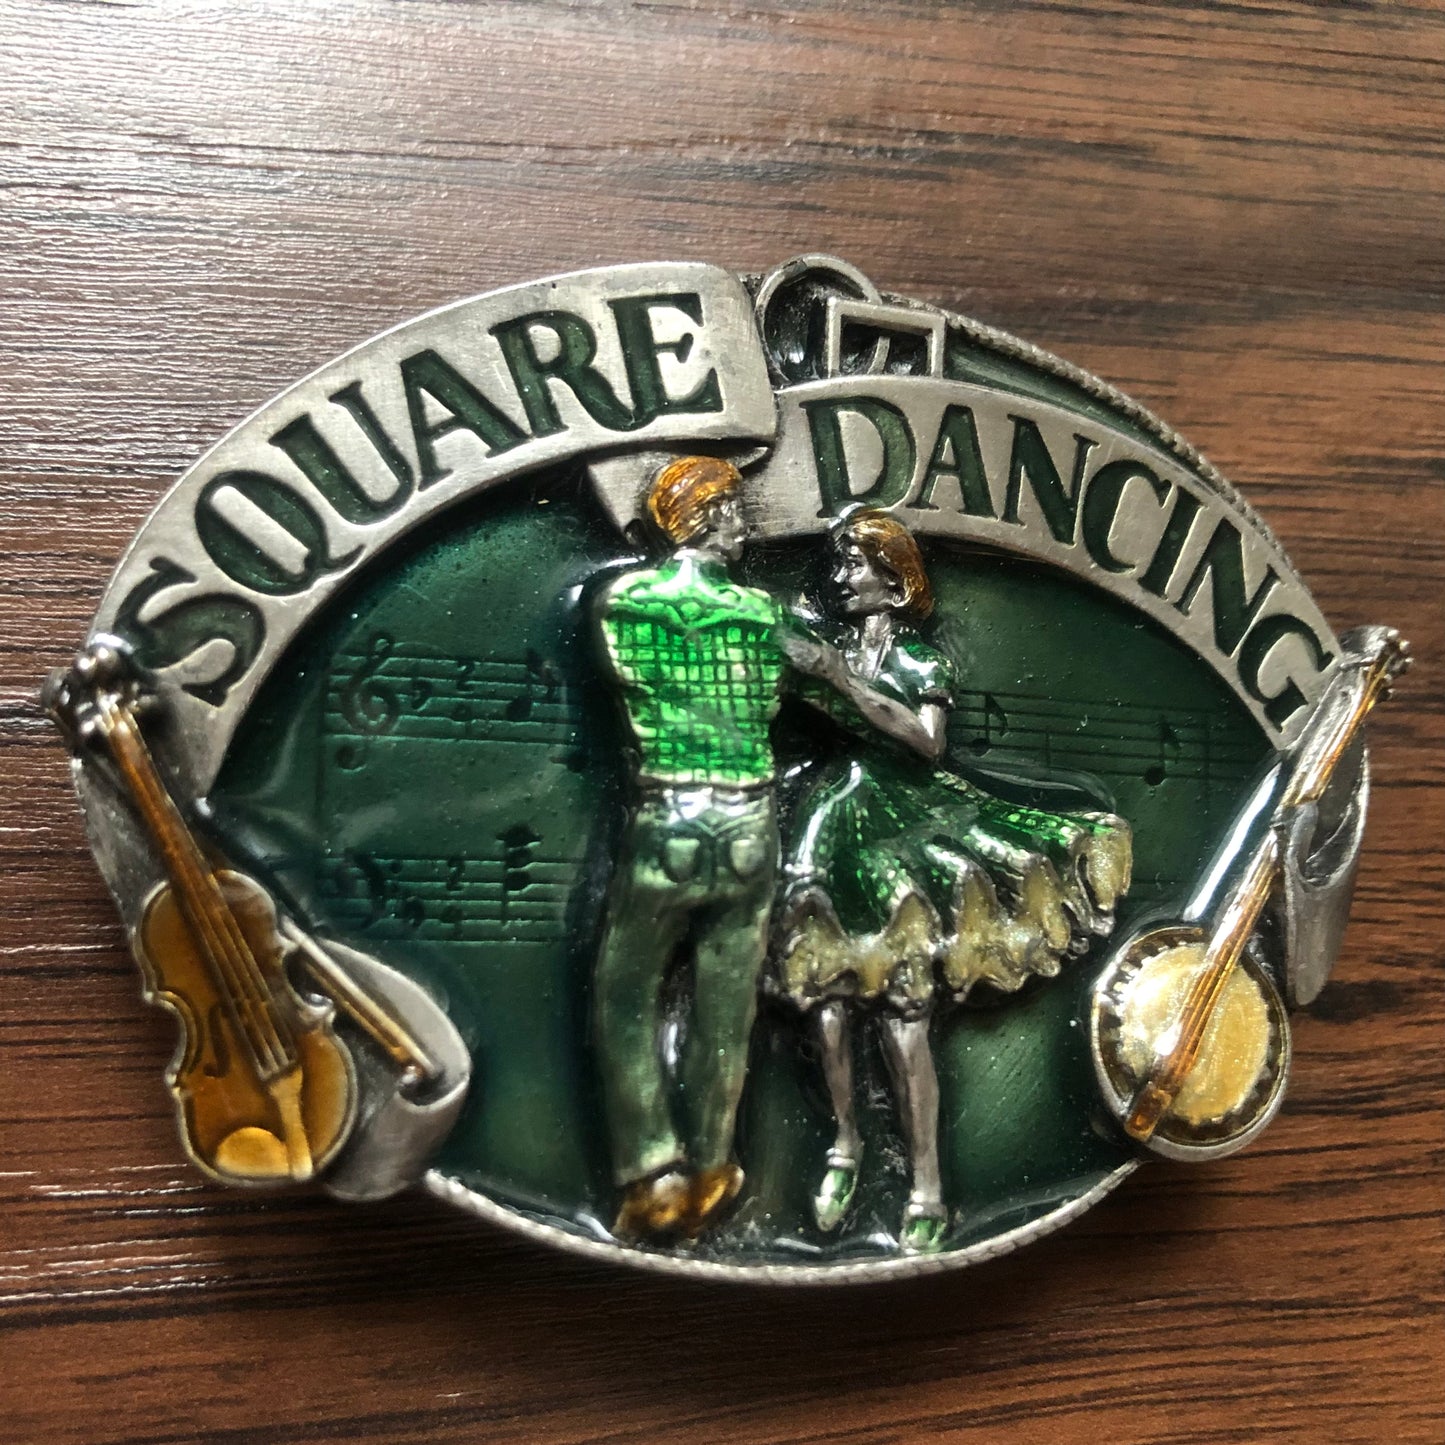 1985 Vintage Western Square Dancing Belt Buckle | Siskiyou Buckle Co.